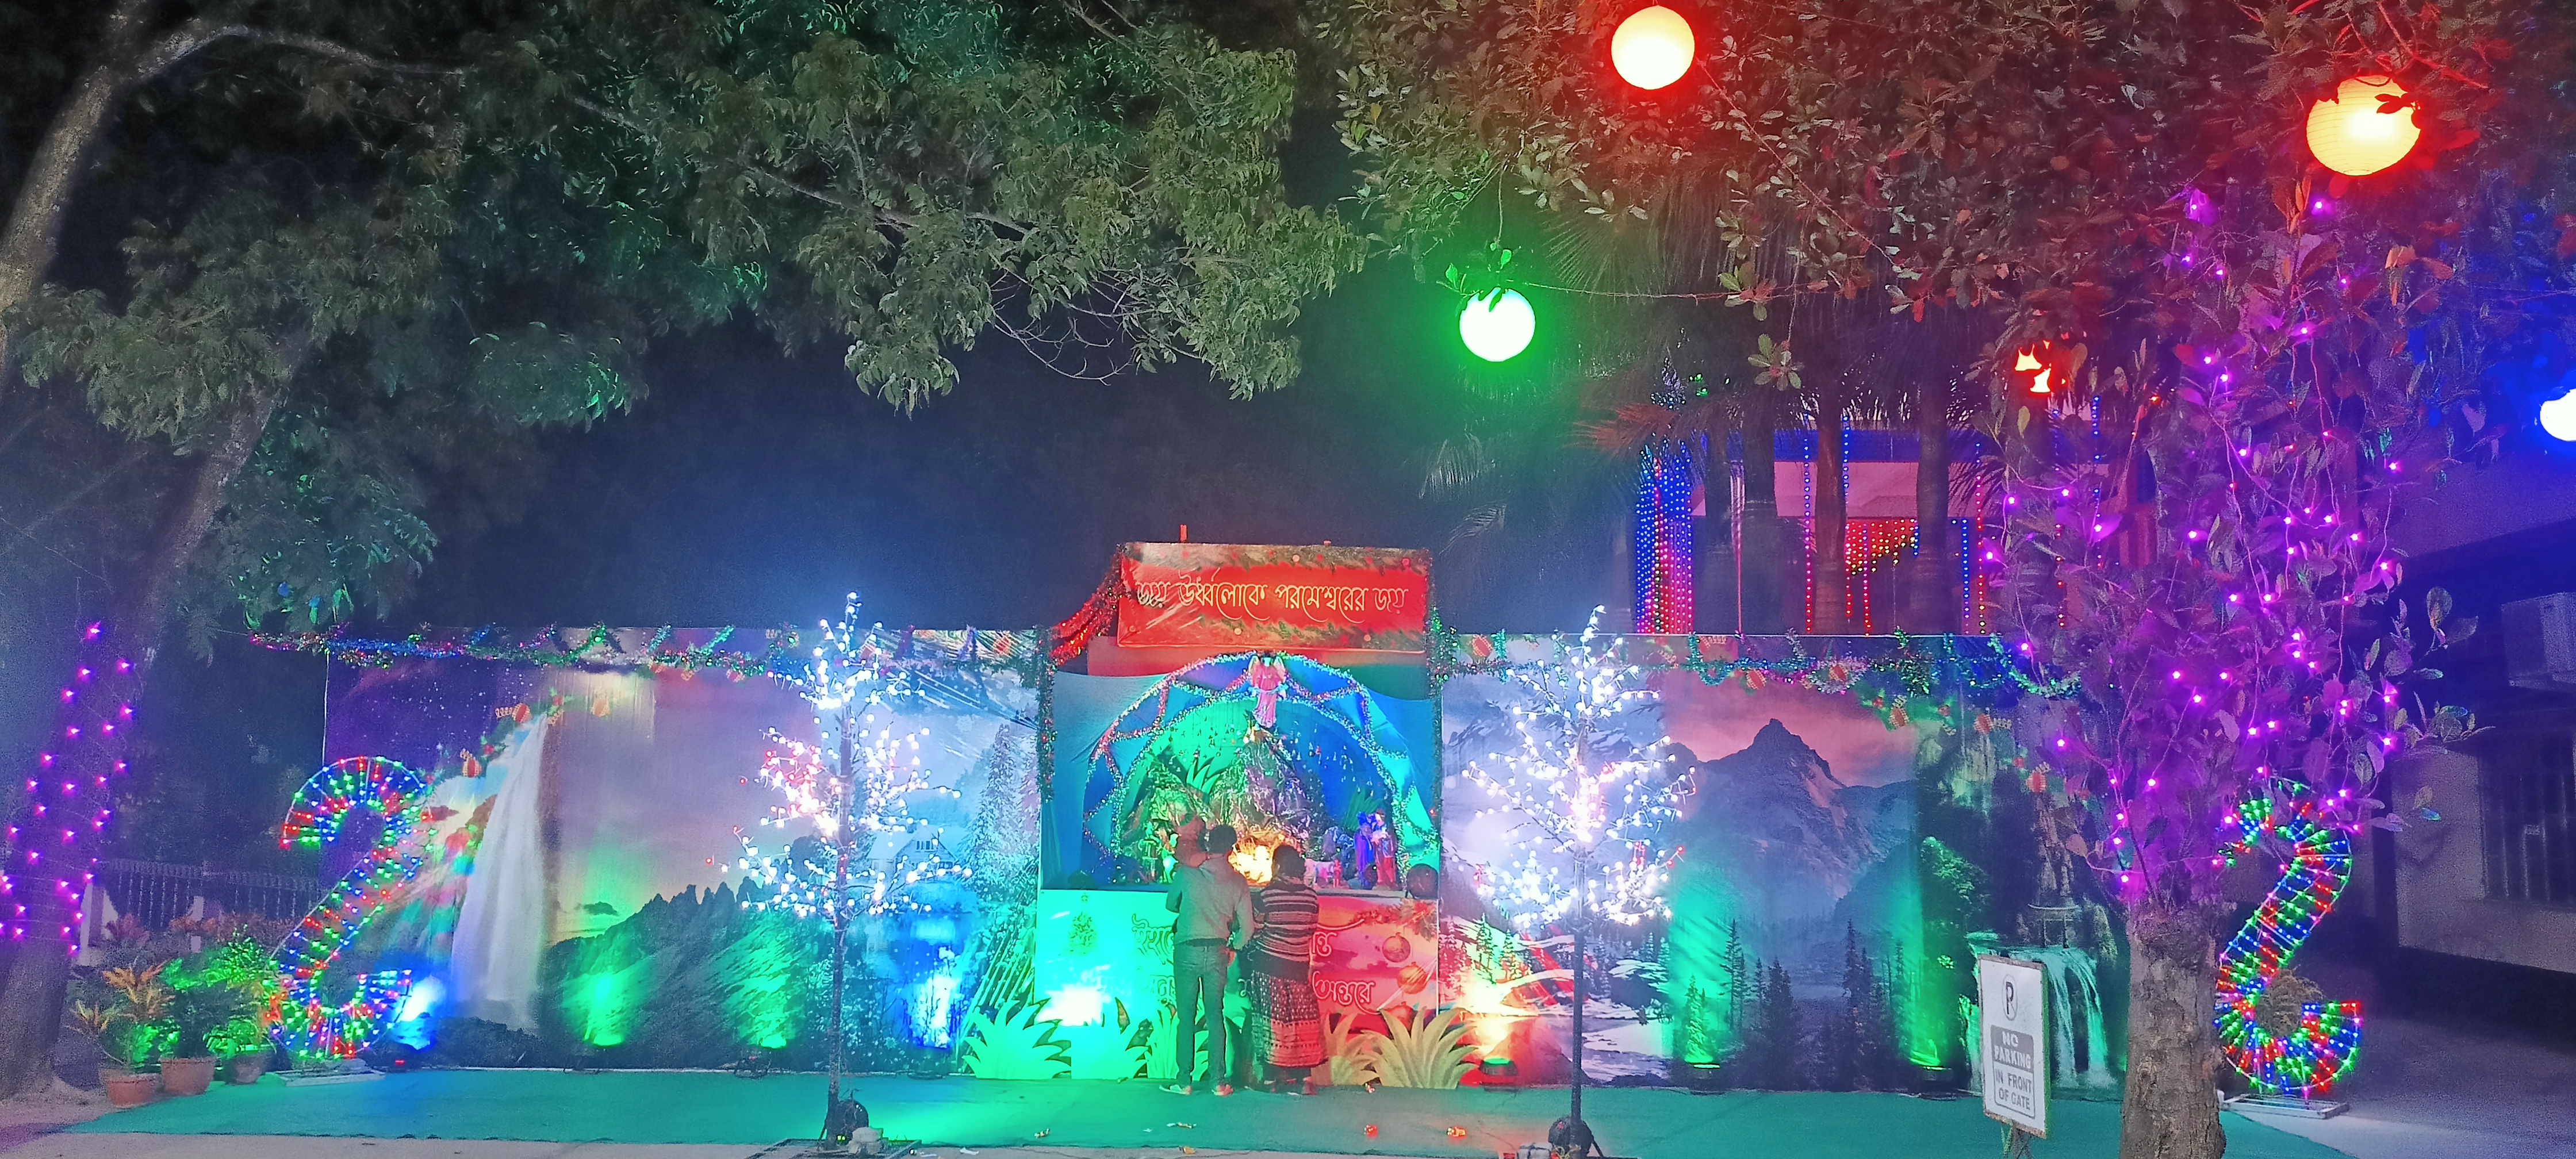 Christmas decoration @ Don Bosco School,Berhampore